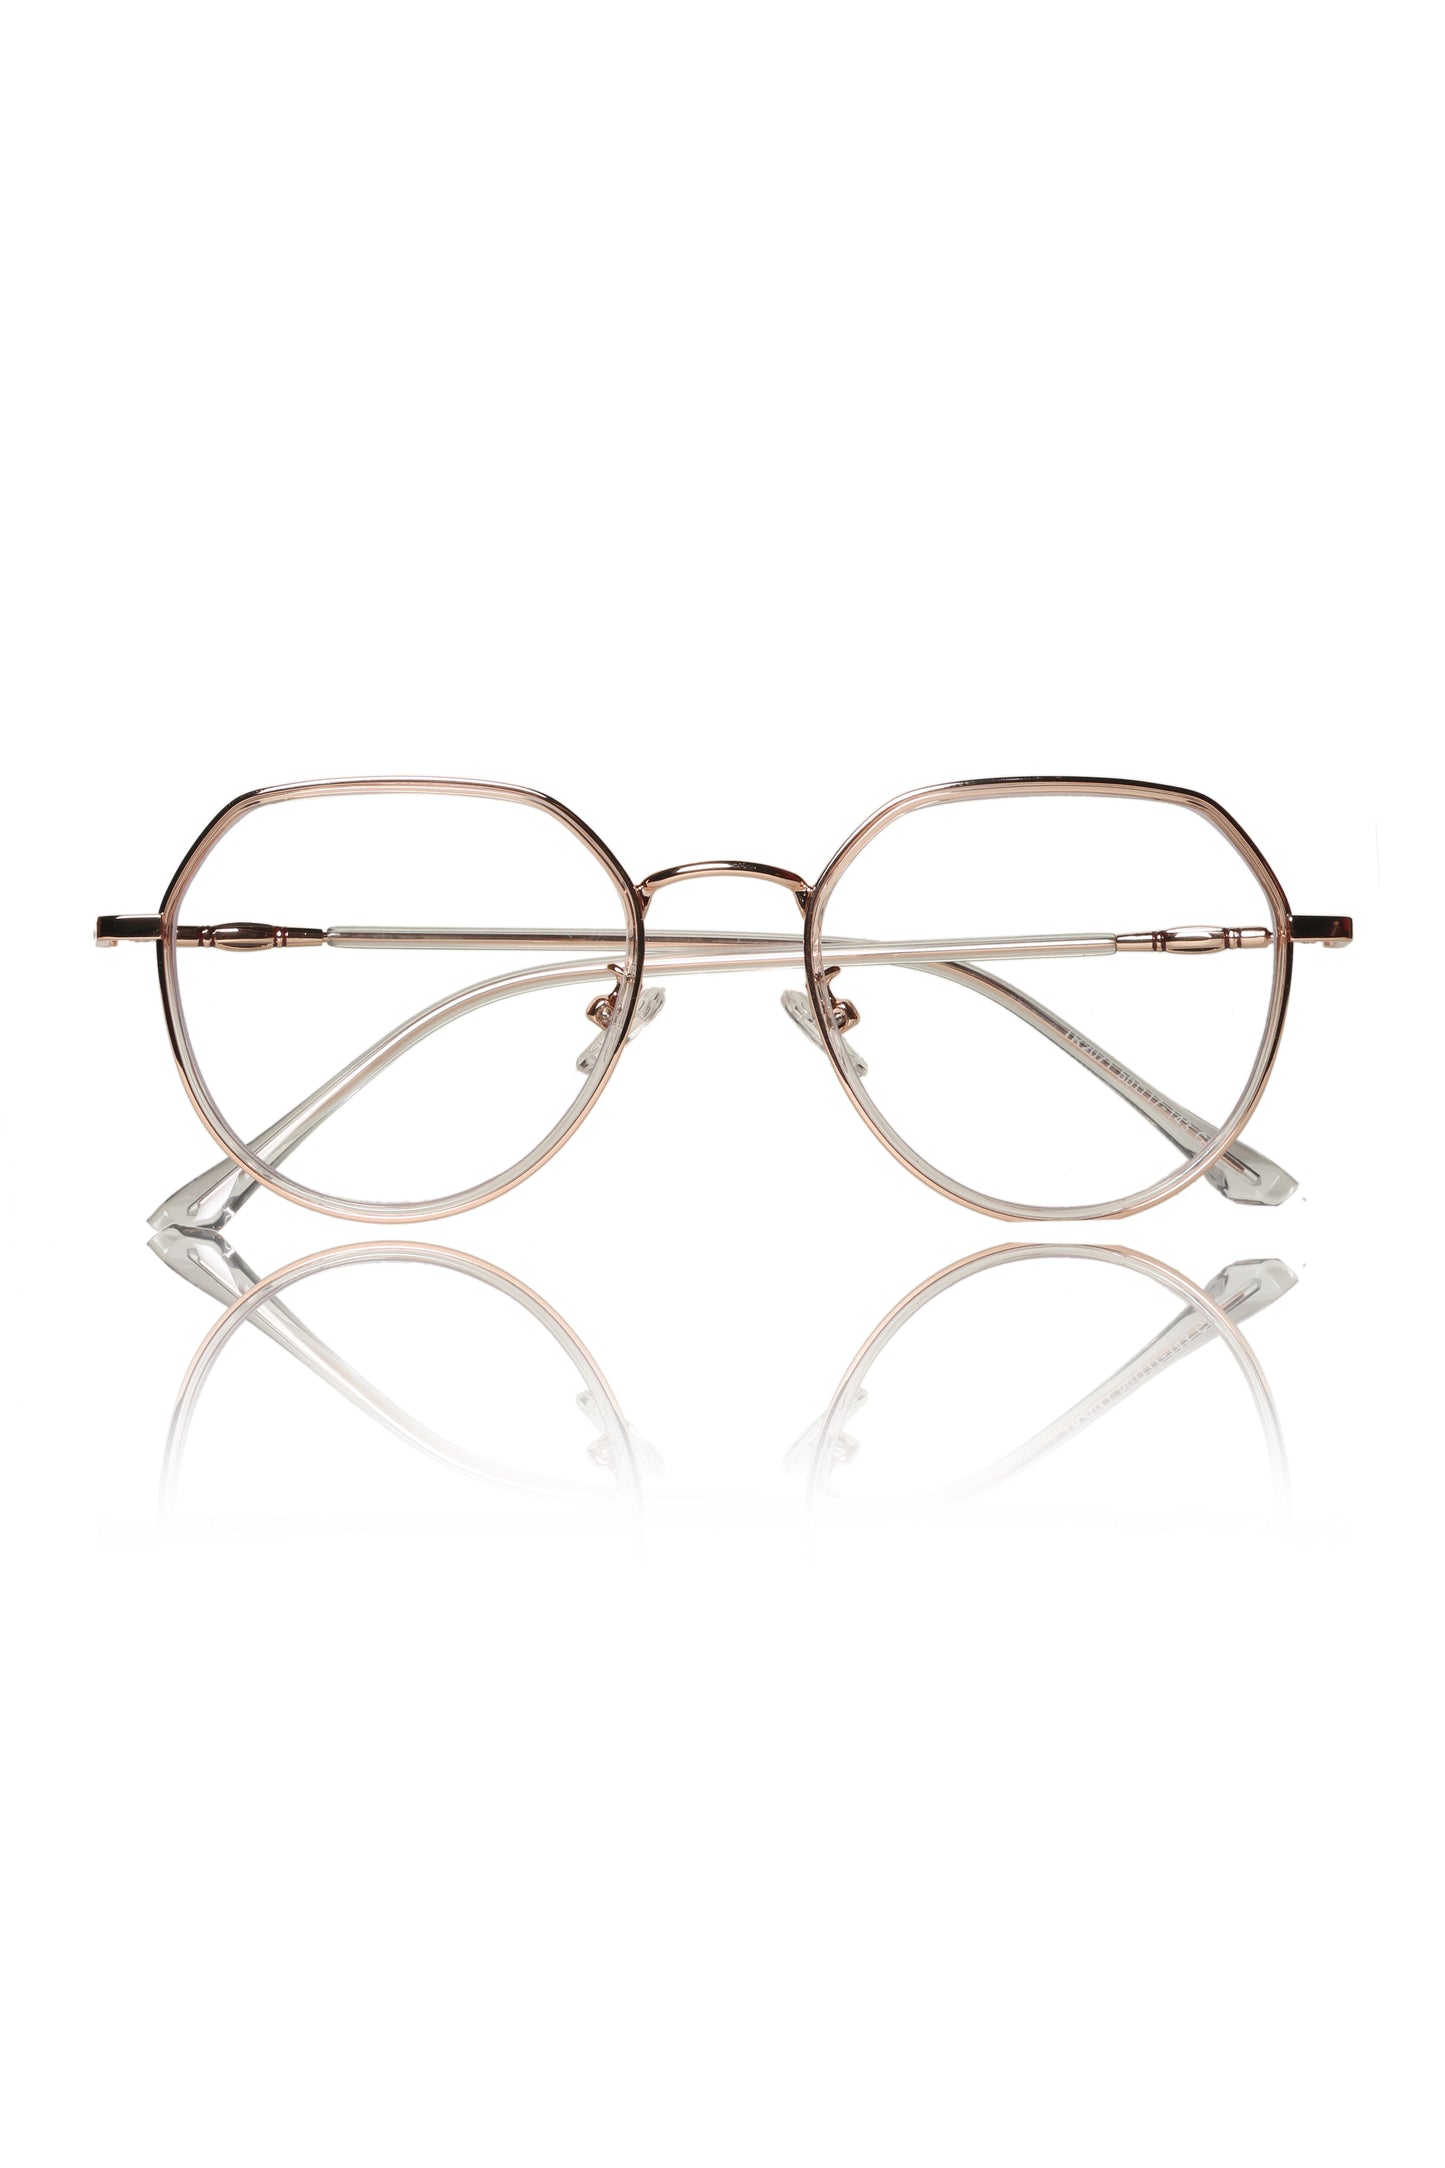 Jodykoes® Premium Series Round-Flat Top Eyewear Eyeglasses Spectacles Frame for Men and Women (Rose Gold)